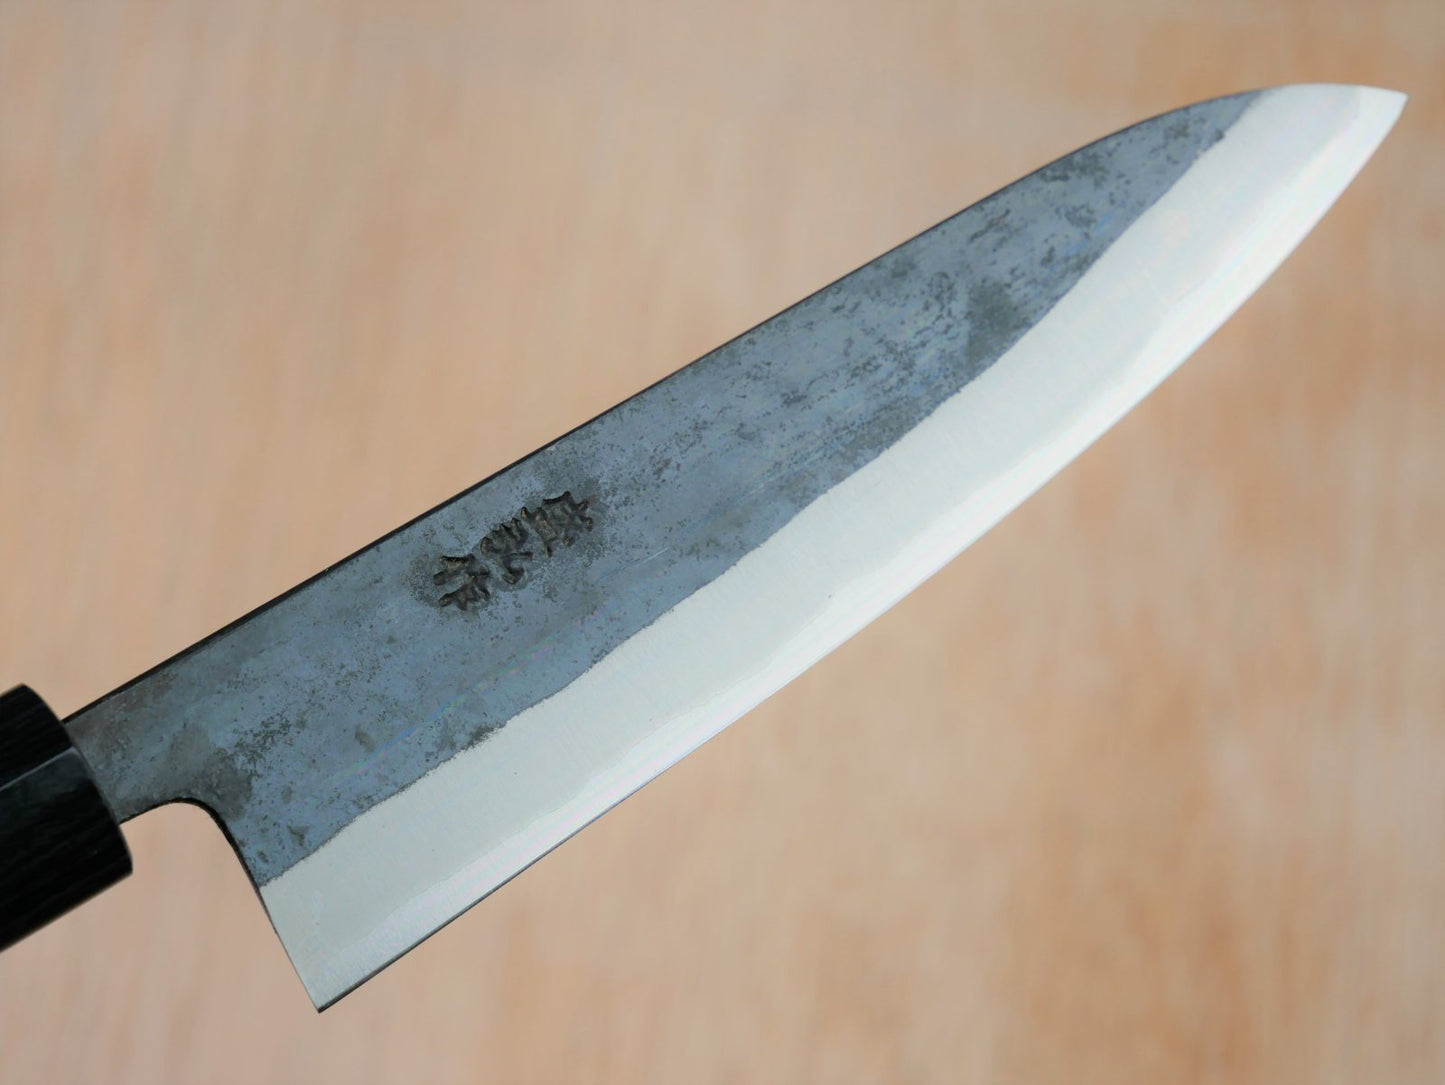 Blade of 180mm Aogami No.2 Kurouchi Gyuto made by Yasuaki Taira